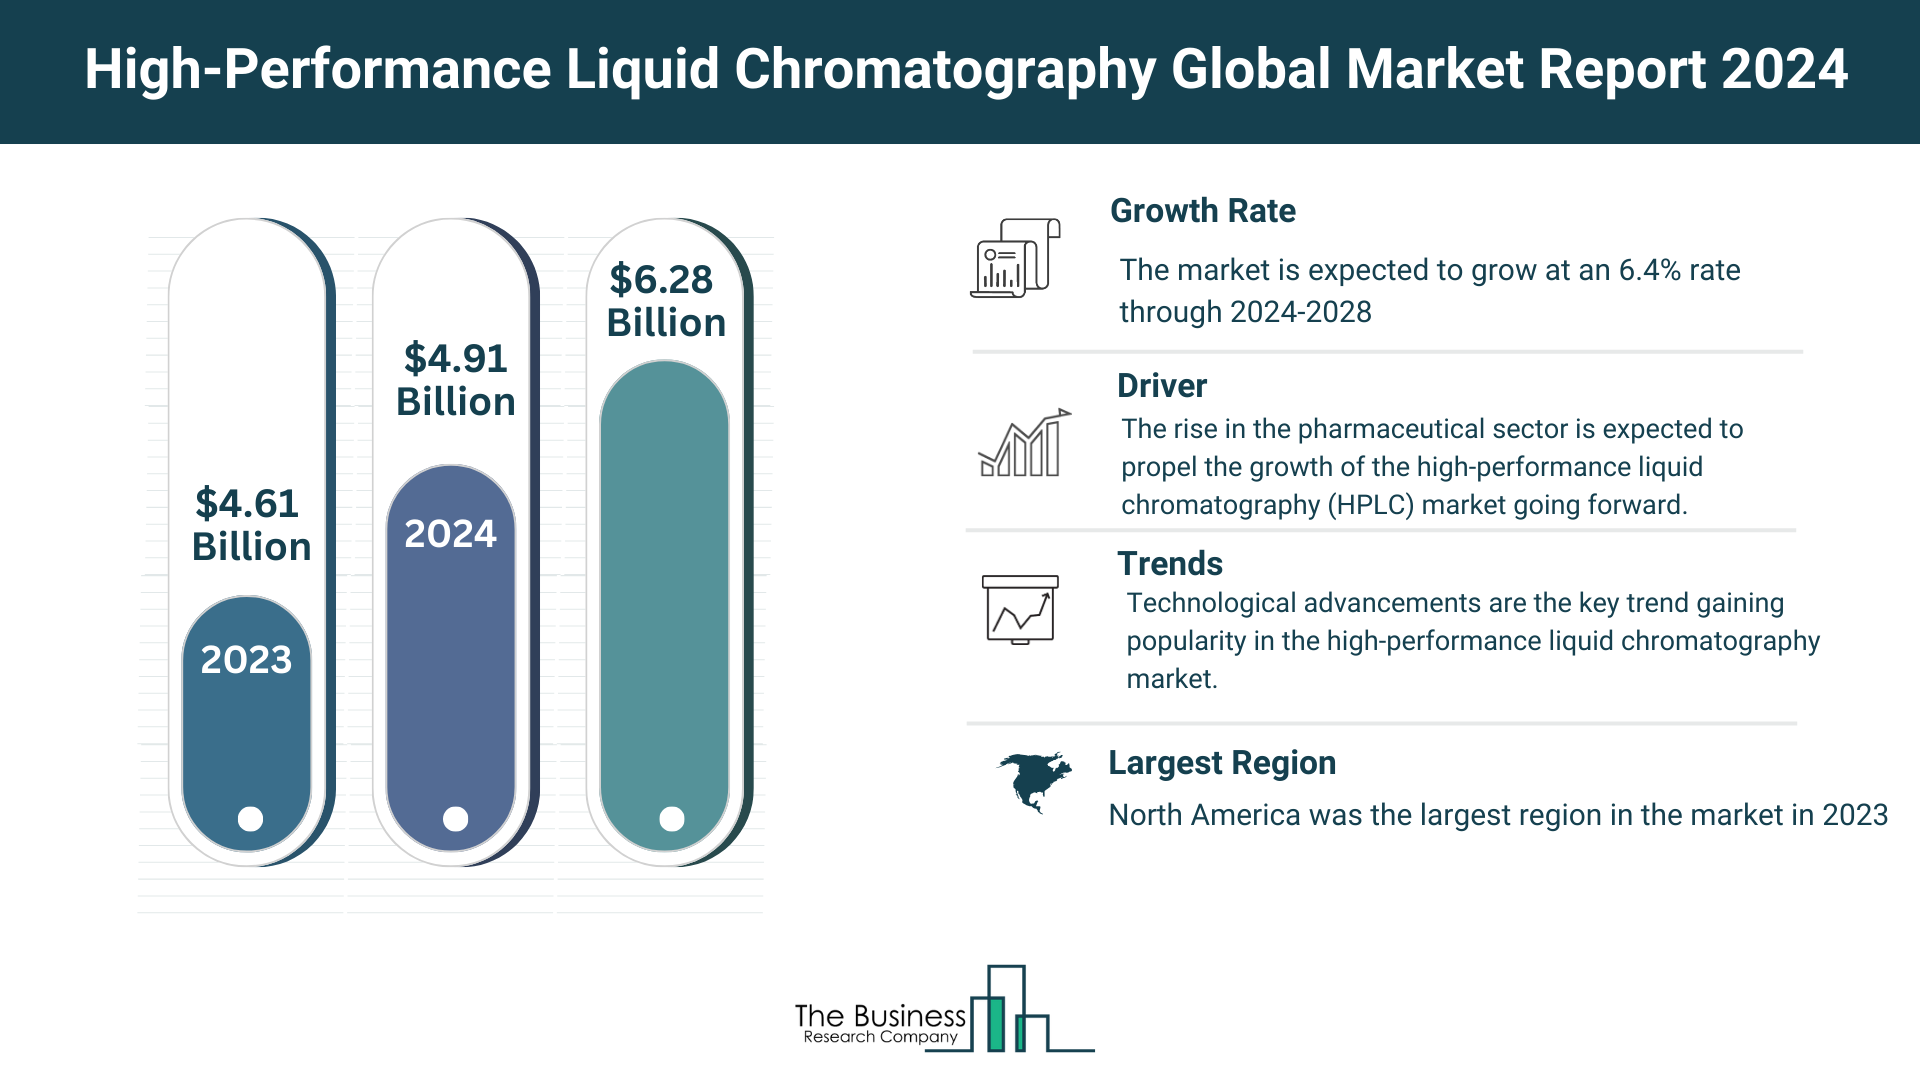 Global High-Performance Liquid Chromatography Market